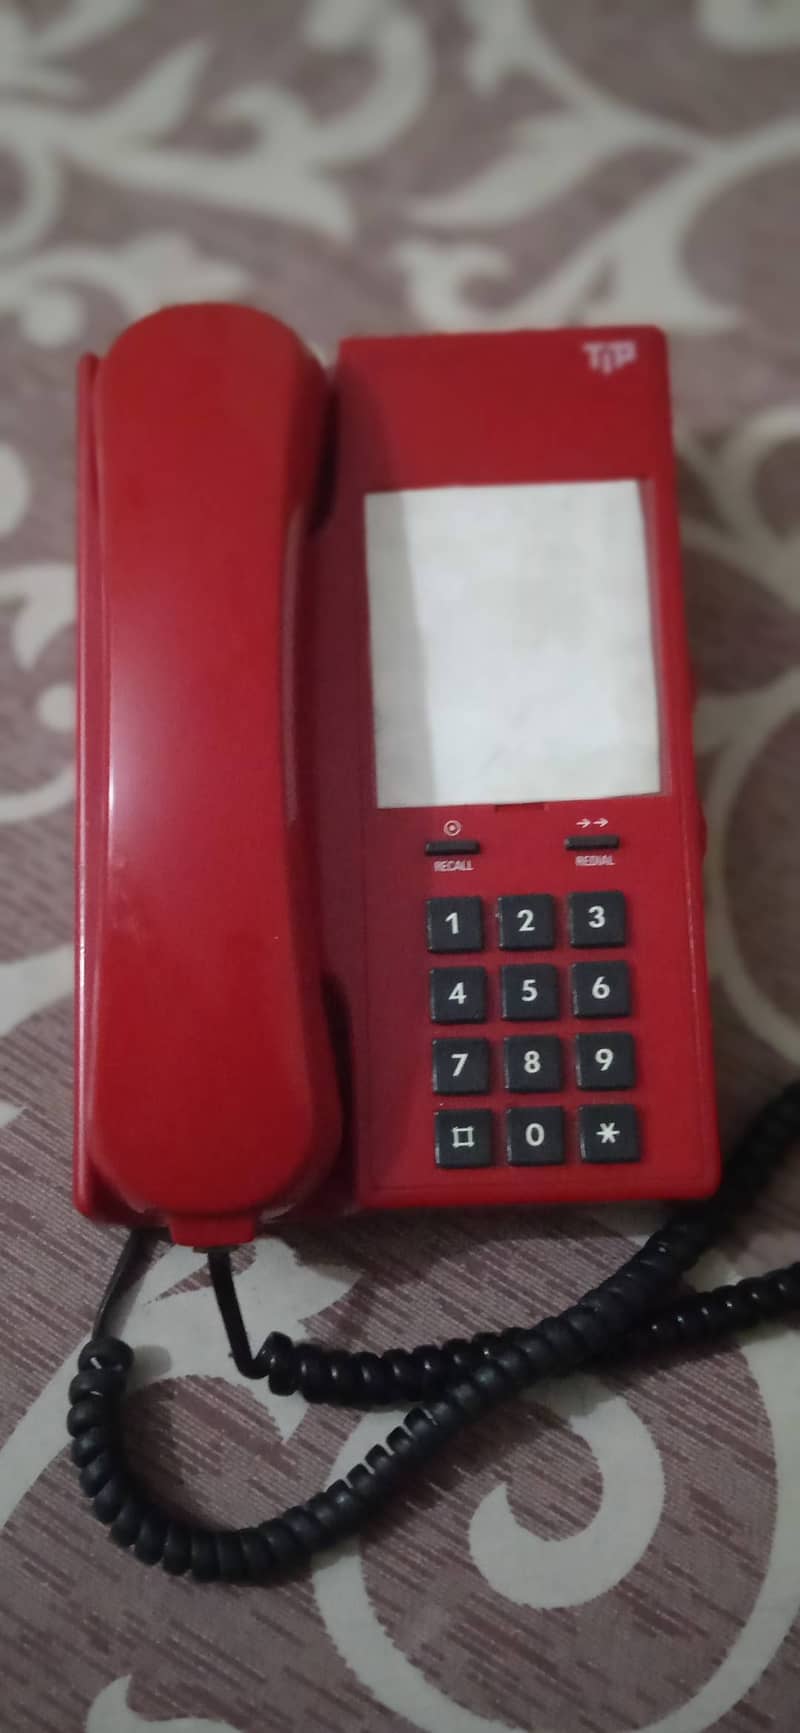 simple landline telephone working condition undamaged 2